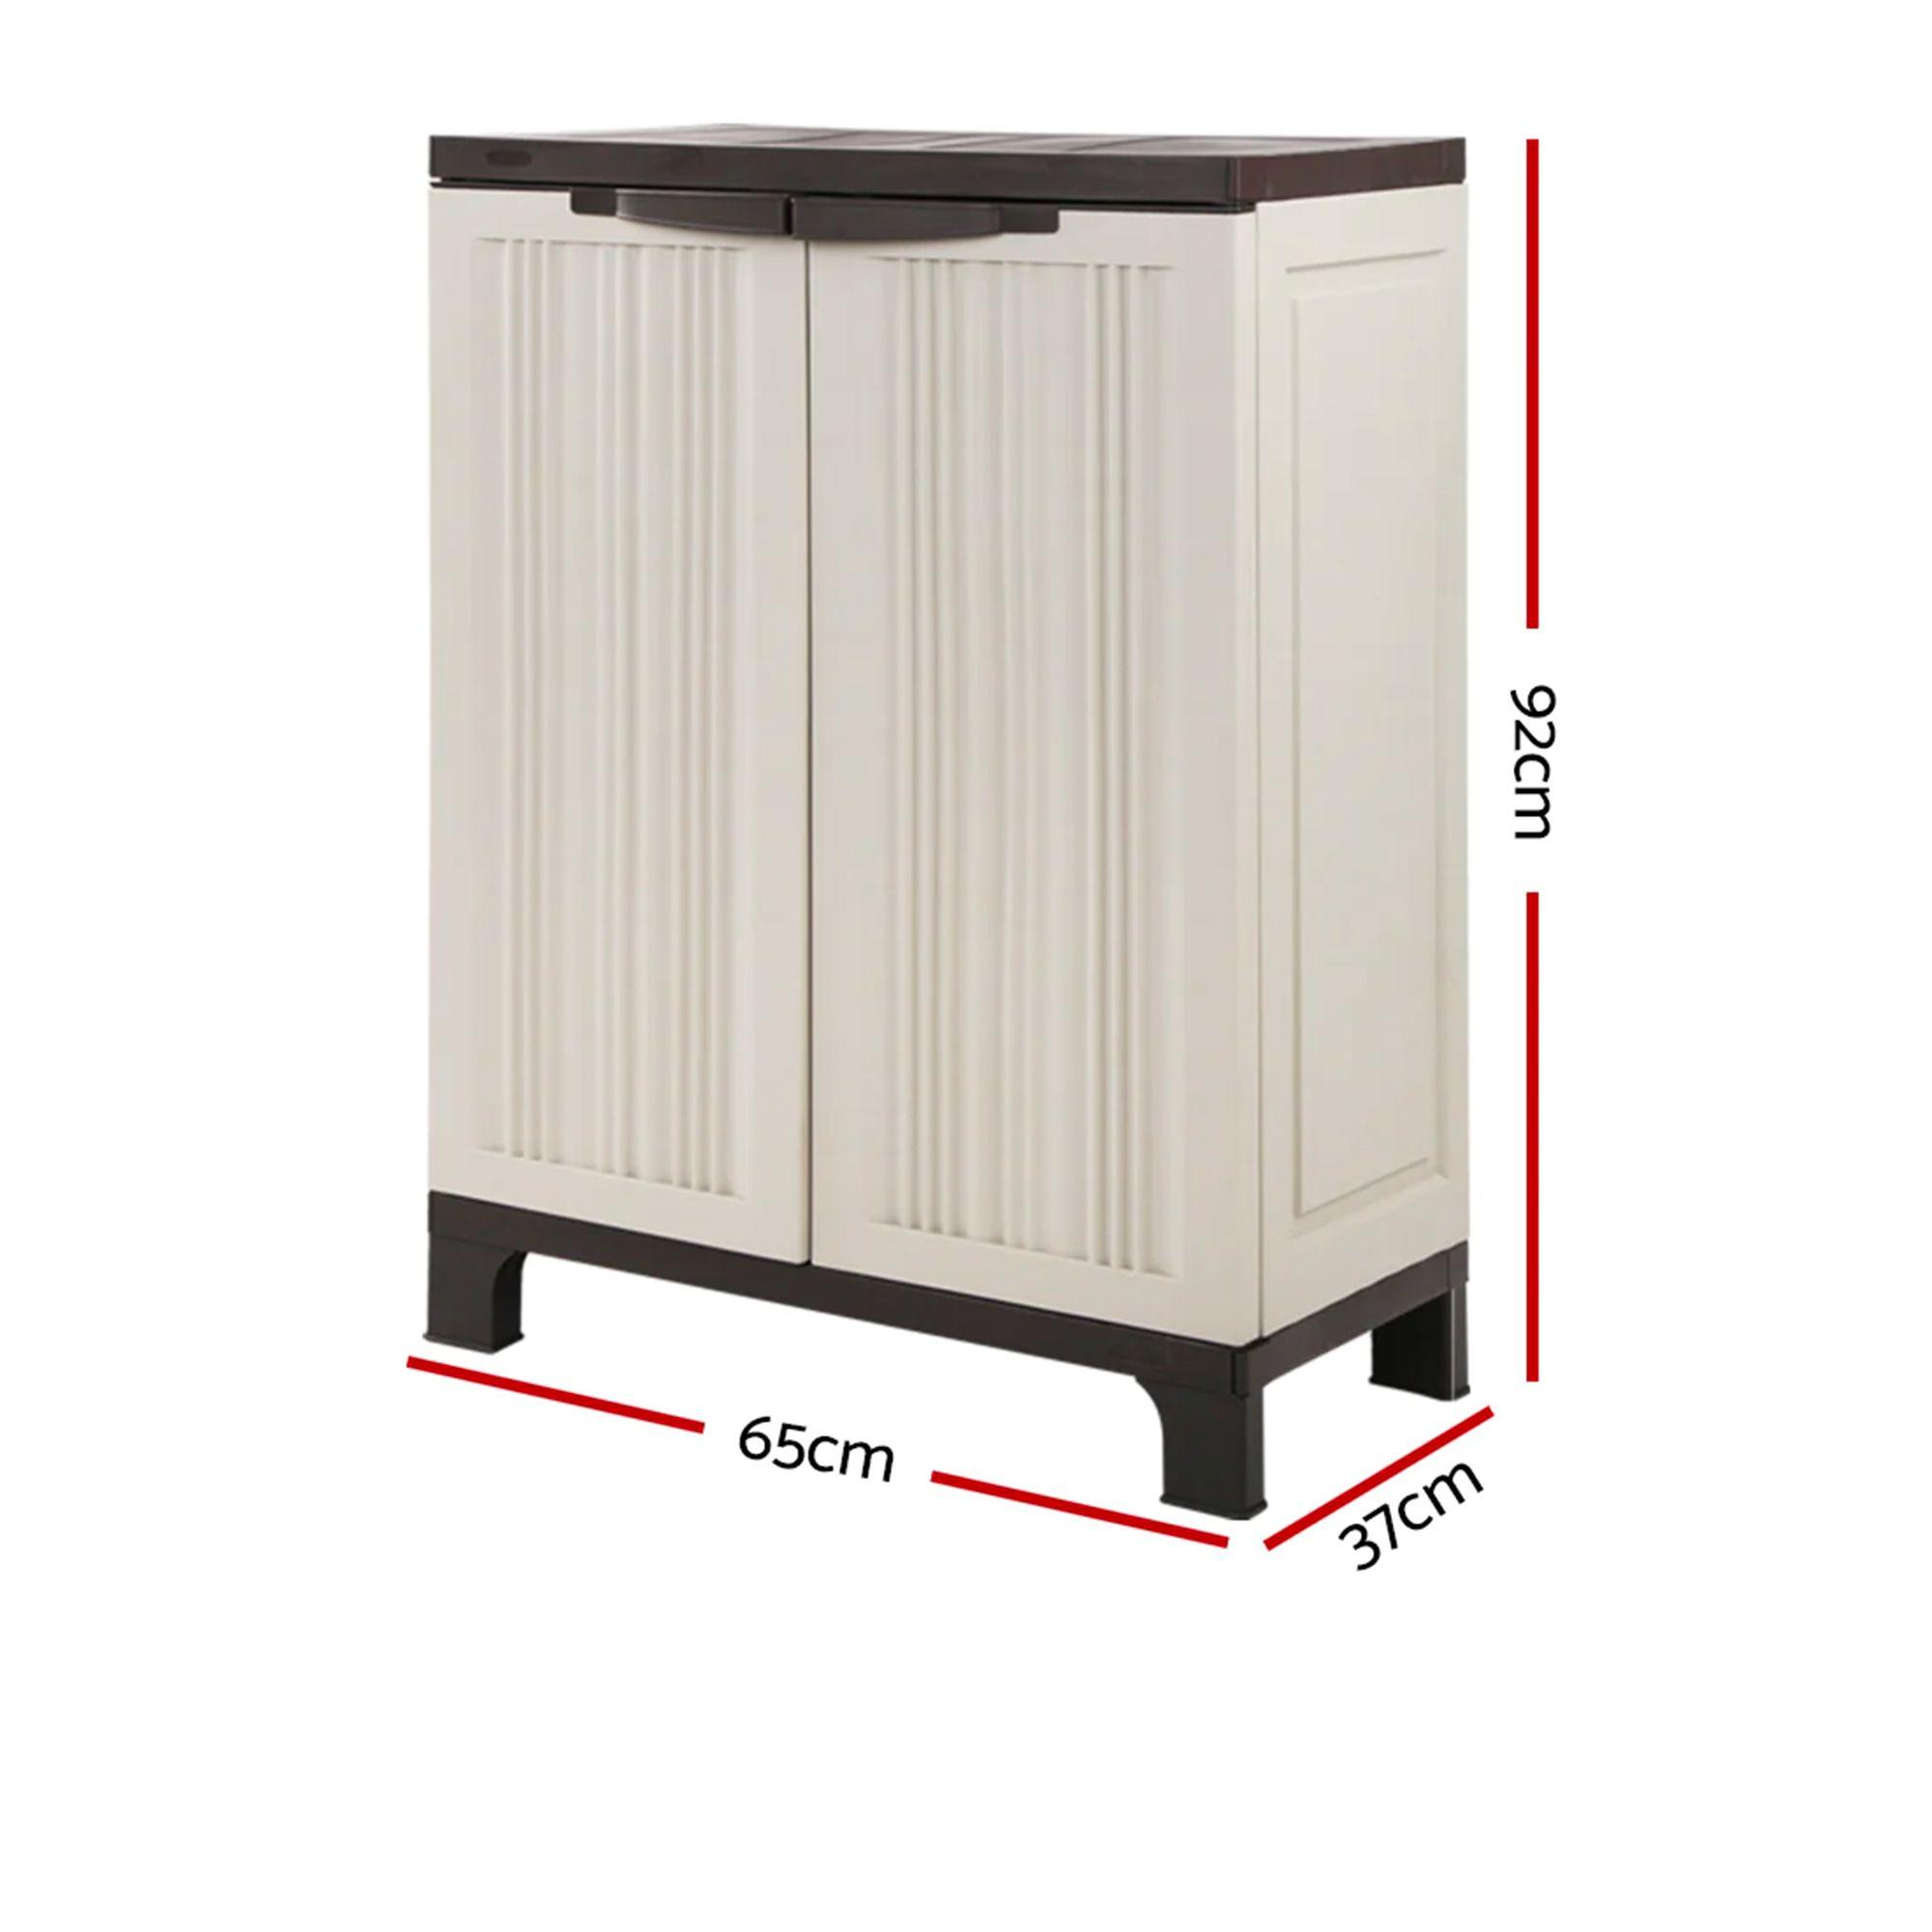 Gardeon Outdoor Storage Cabinet 92cm Image 4